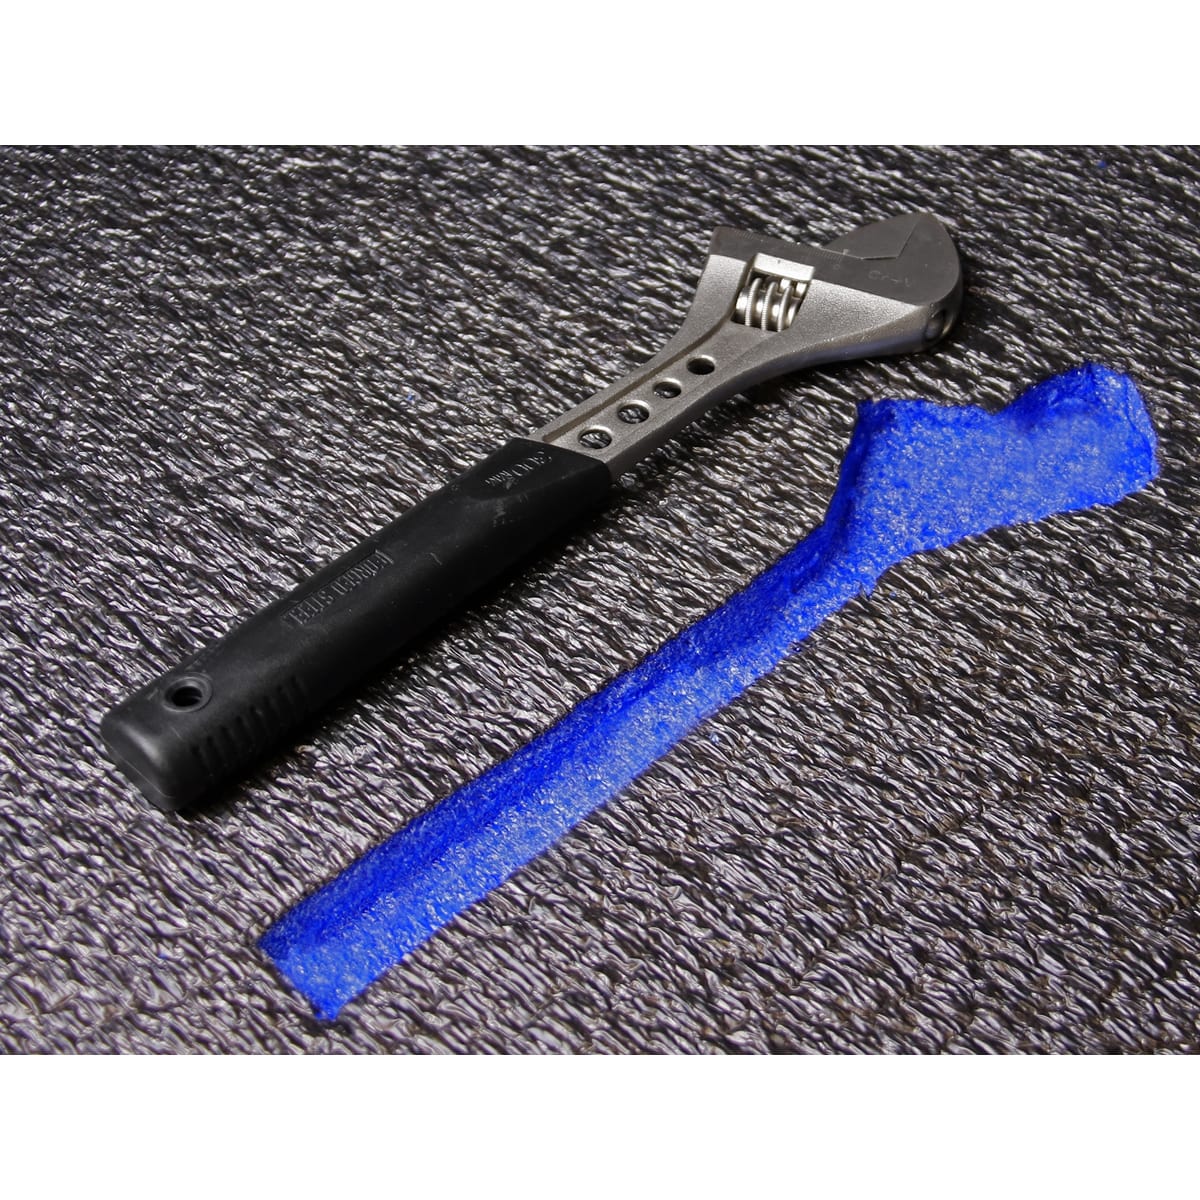 Sealey SF30B Easy Peel Shadow Foam Blue/Black 1200 x 550 x 30mm